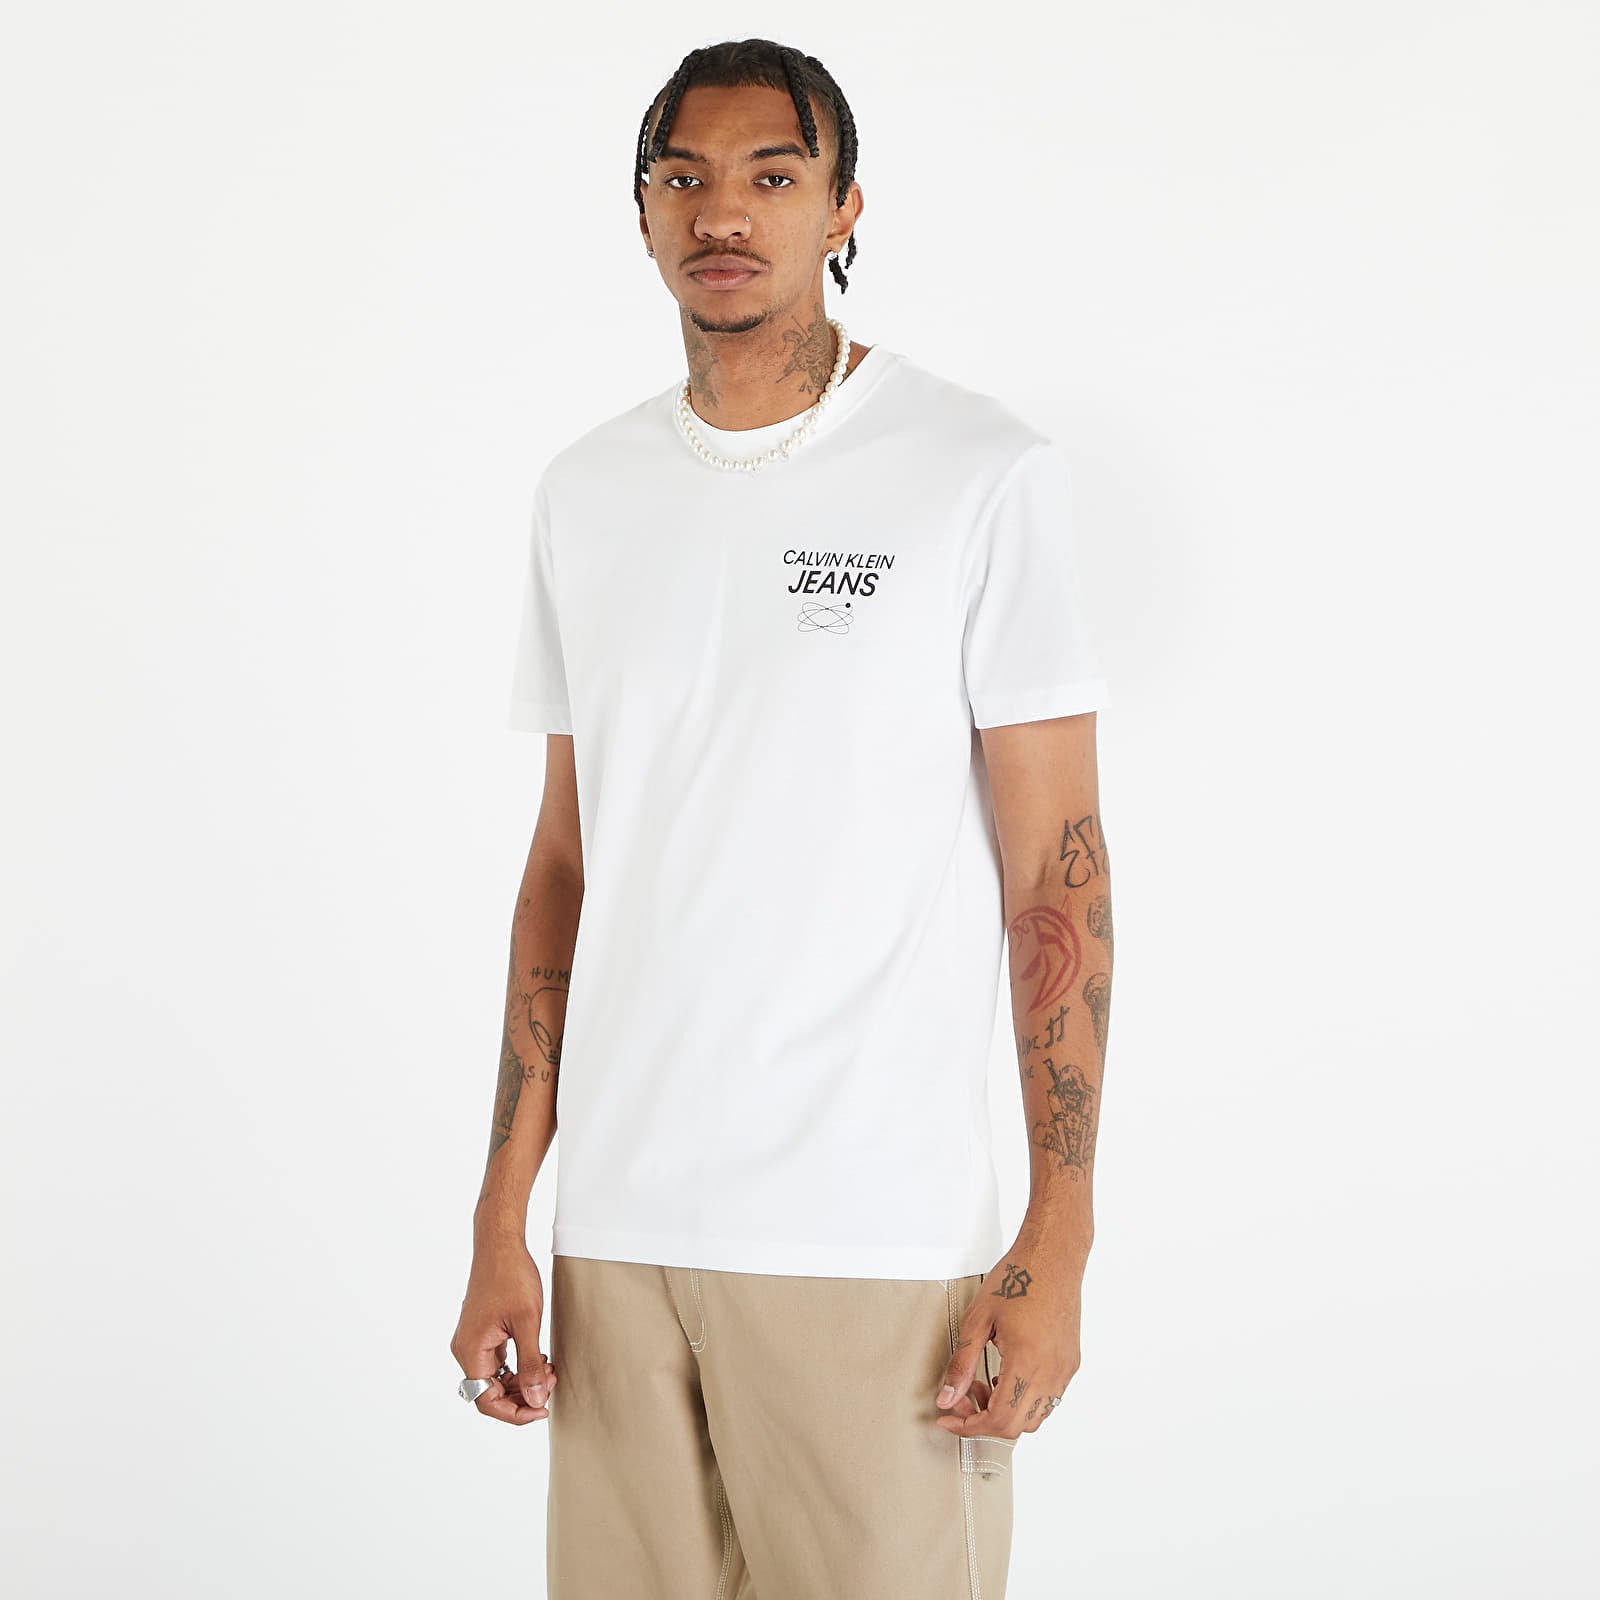 Future Calvin Back Galaxy Jeans | White T-Shirts Footshop T-Shirt Klein